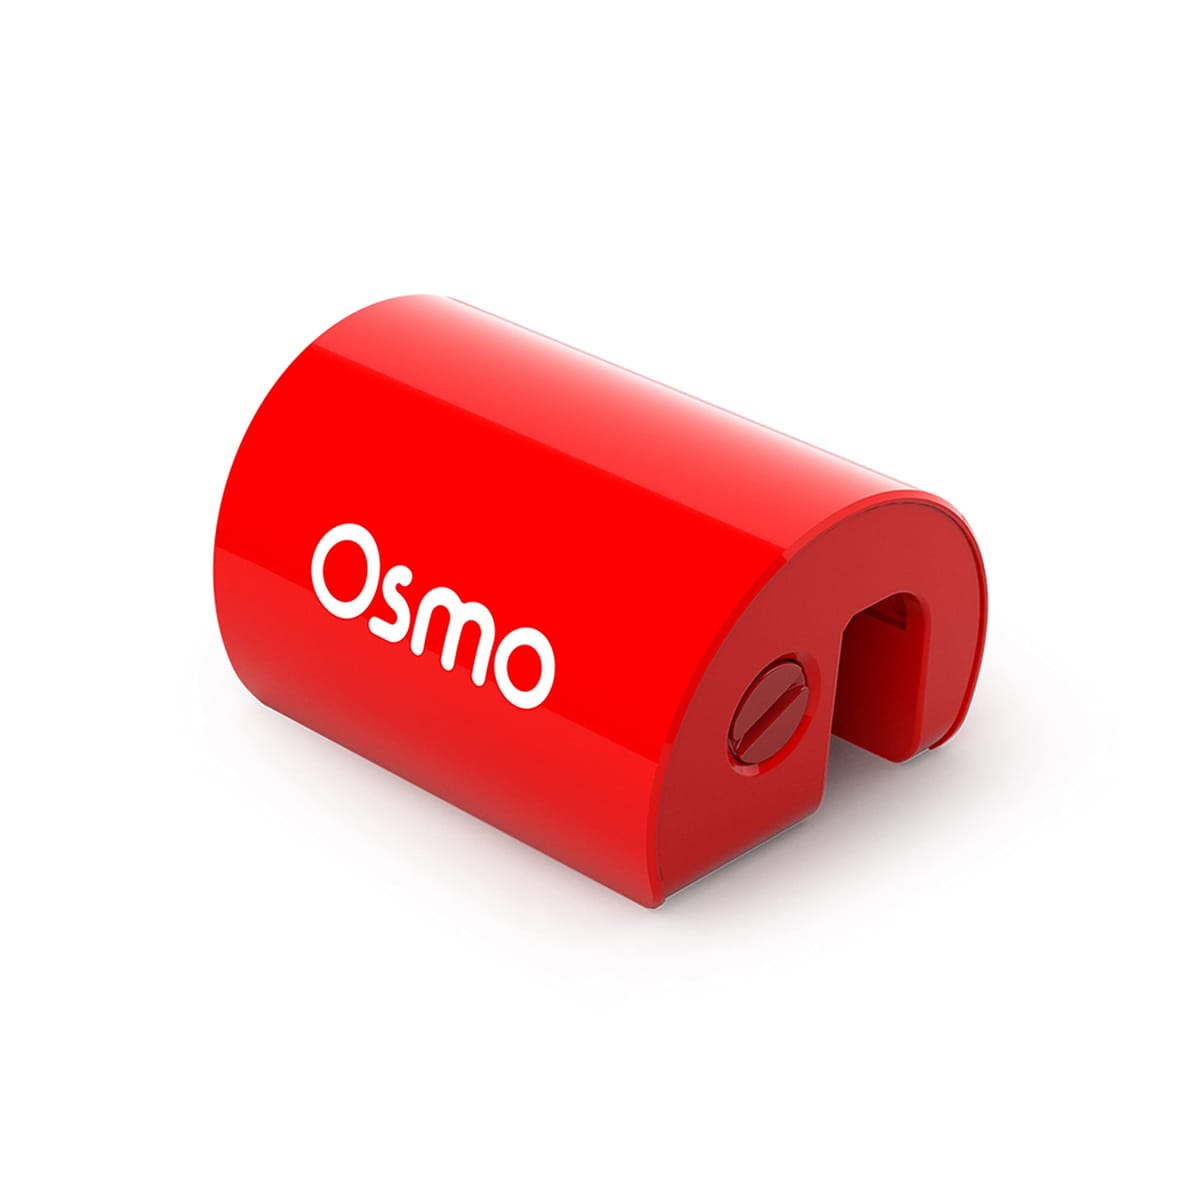 Osmo(オズモ) プロフレクター for iPad (iPad用リフレクター)